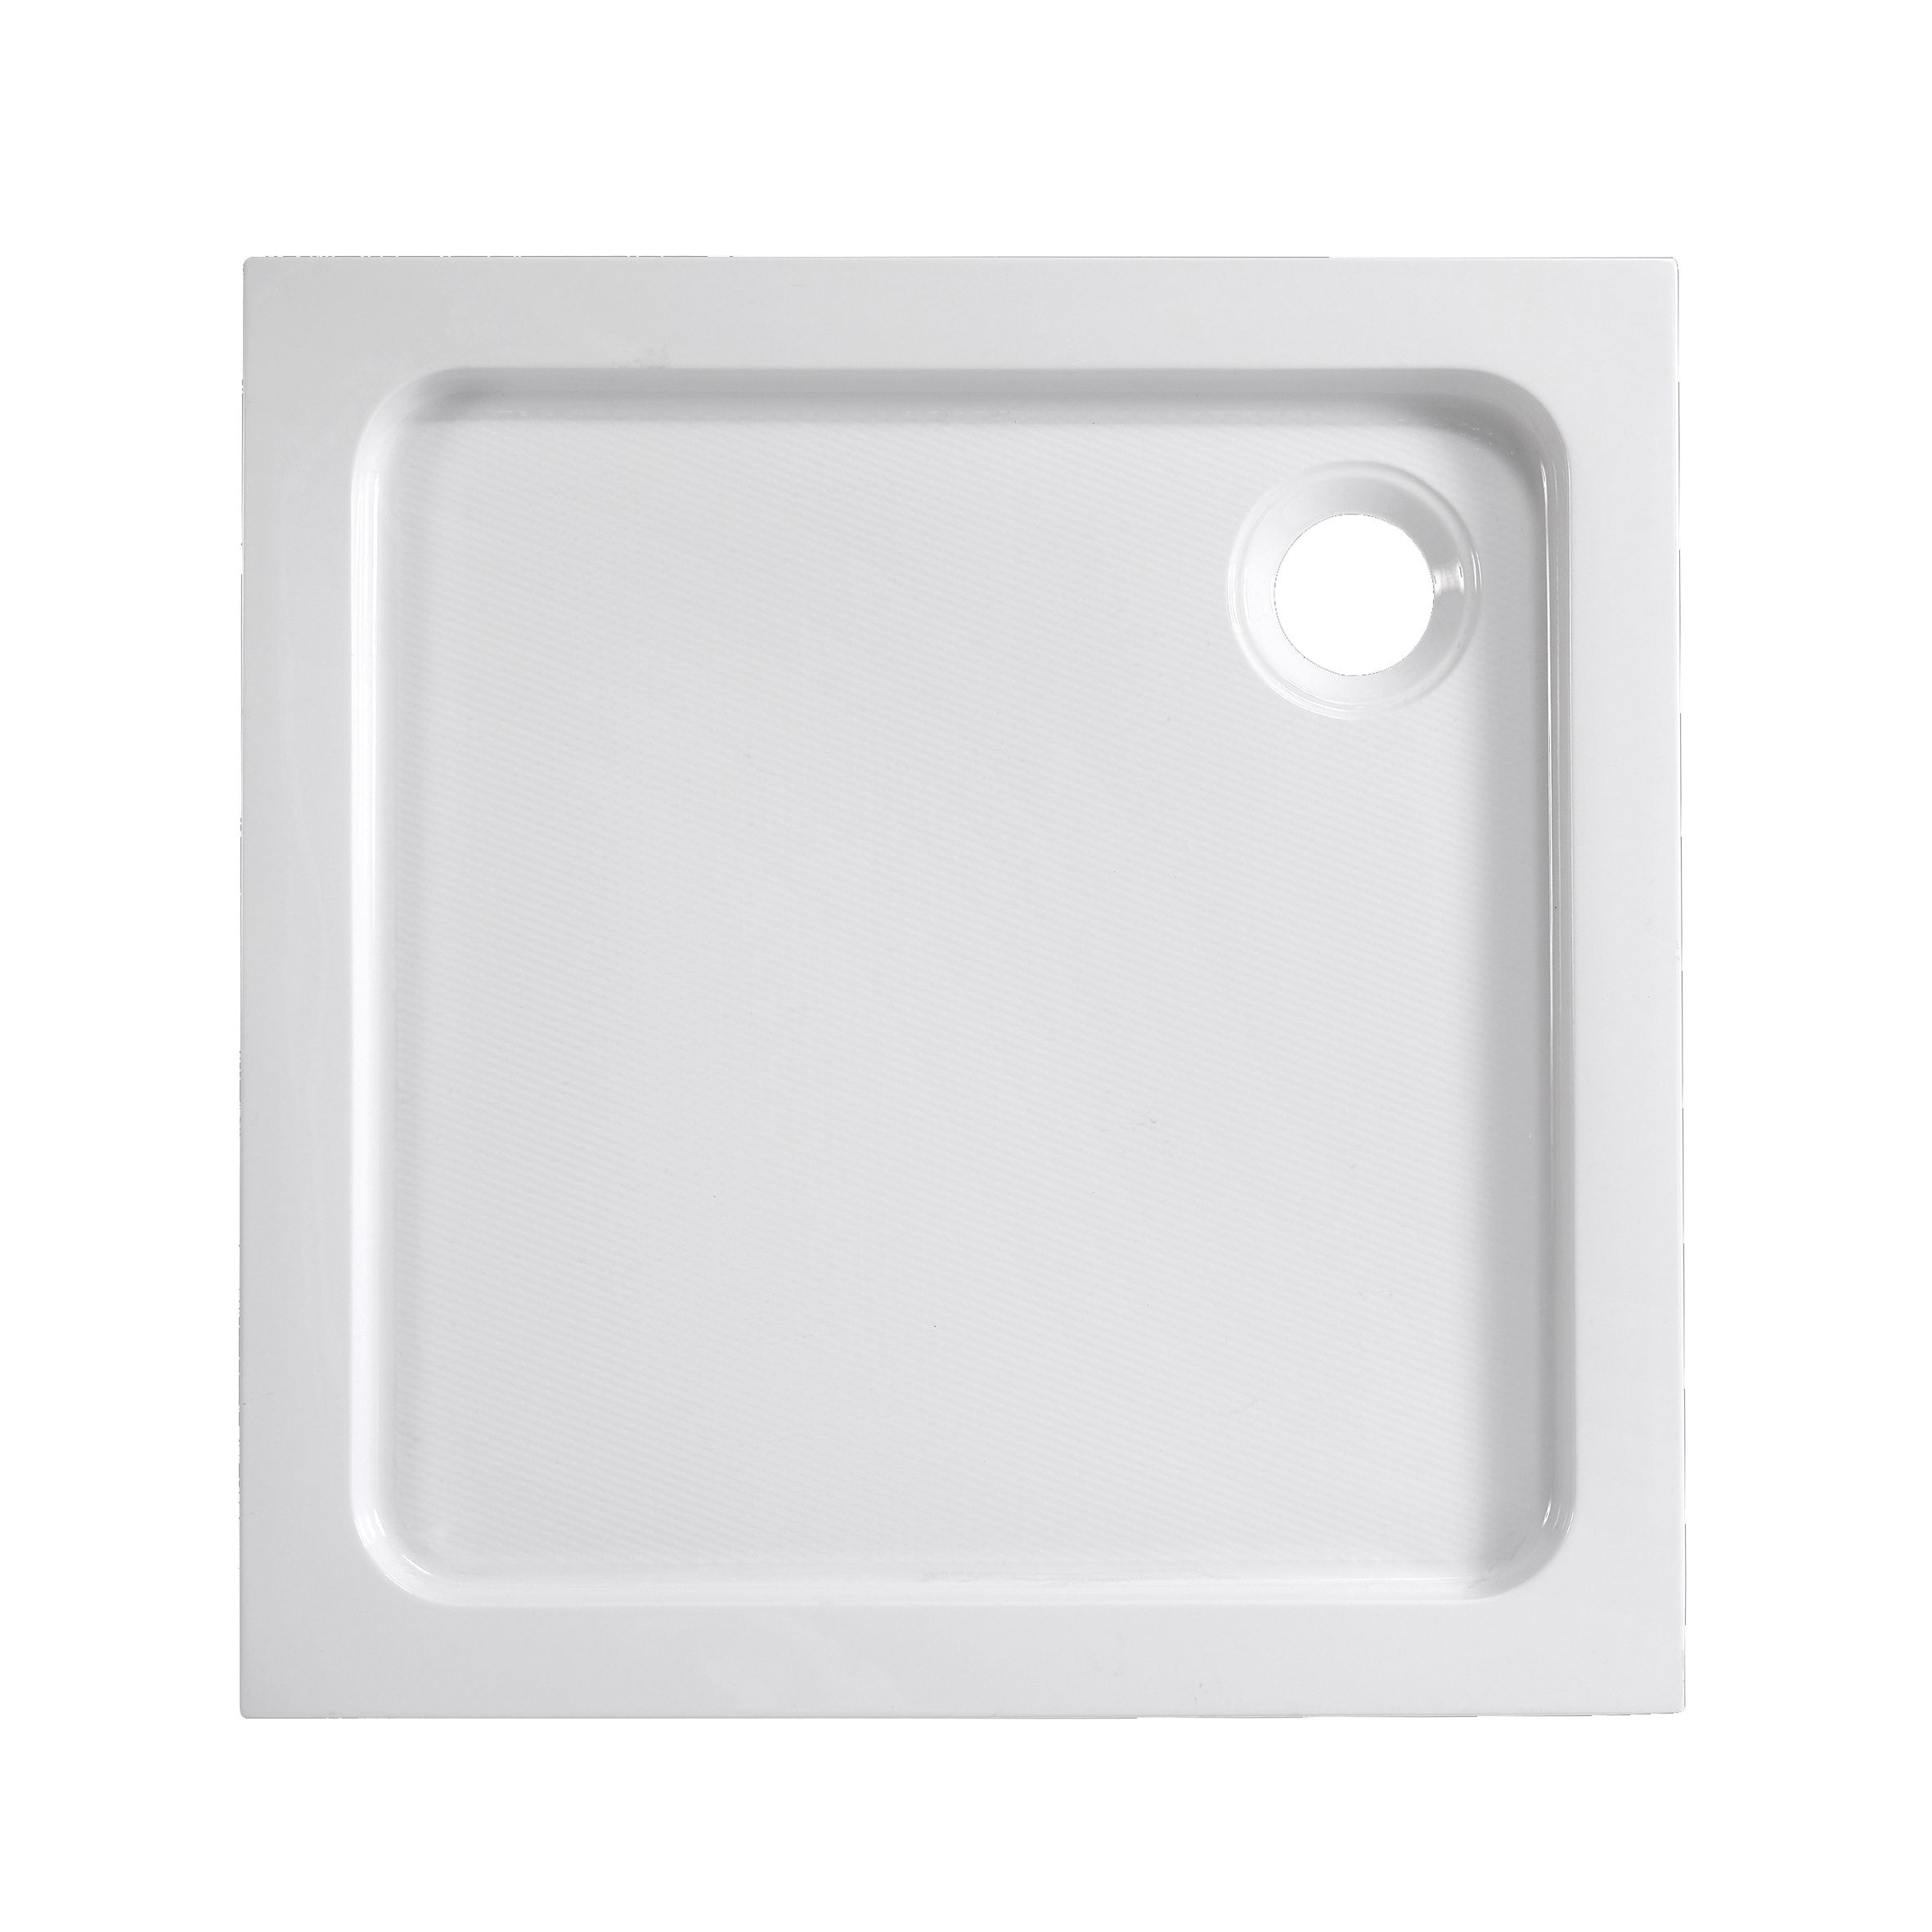 Dommel Gloss White Square Corner drain Shower tray (L)800mm (W)800mm